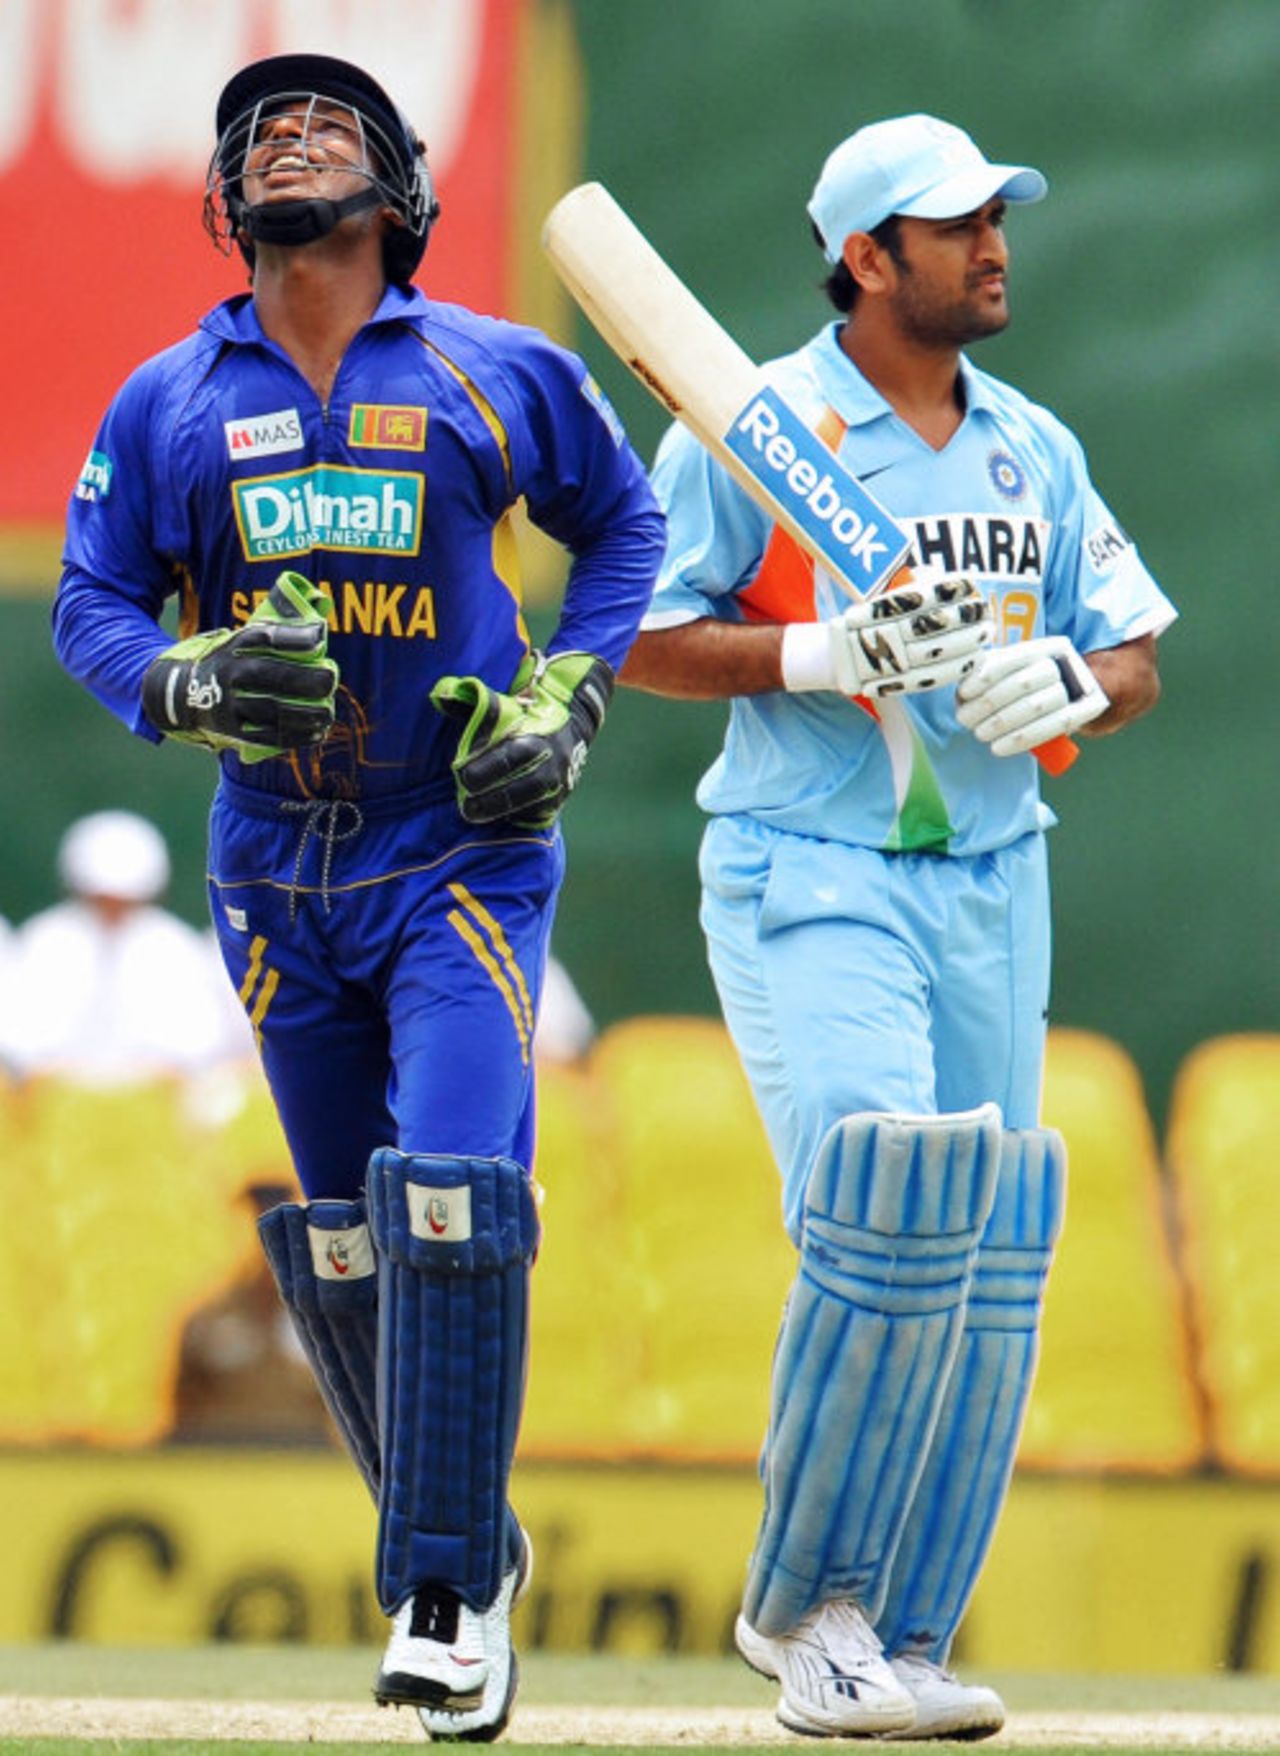 Kumar Sangakkara is delighted at Mahendra Singh Dhoni's dismissal, Sri Lanka v India, 1st ODI, Dambulla, August 18, 2008 